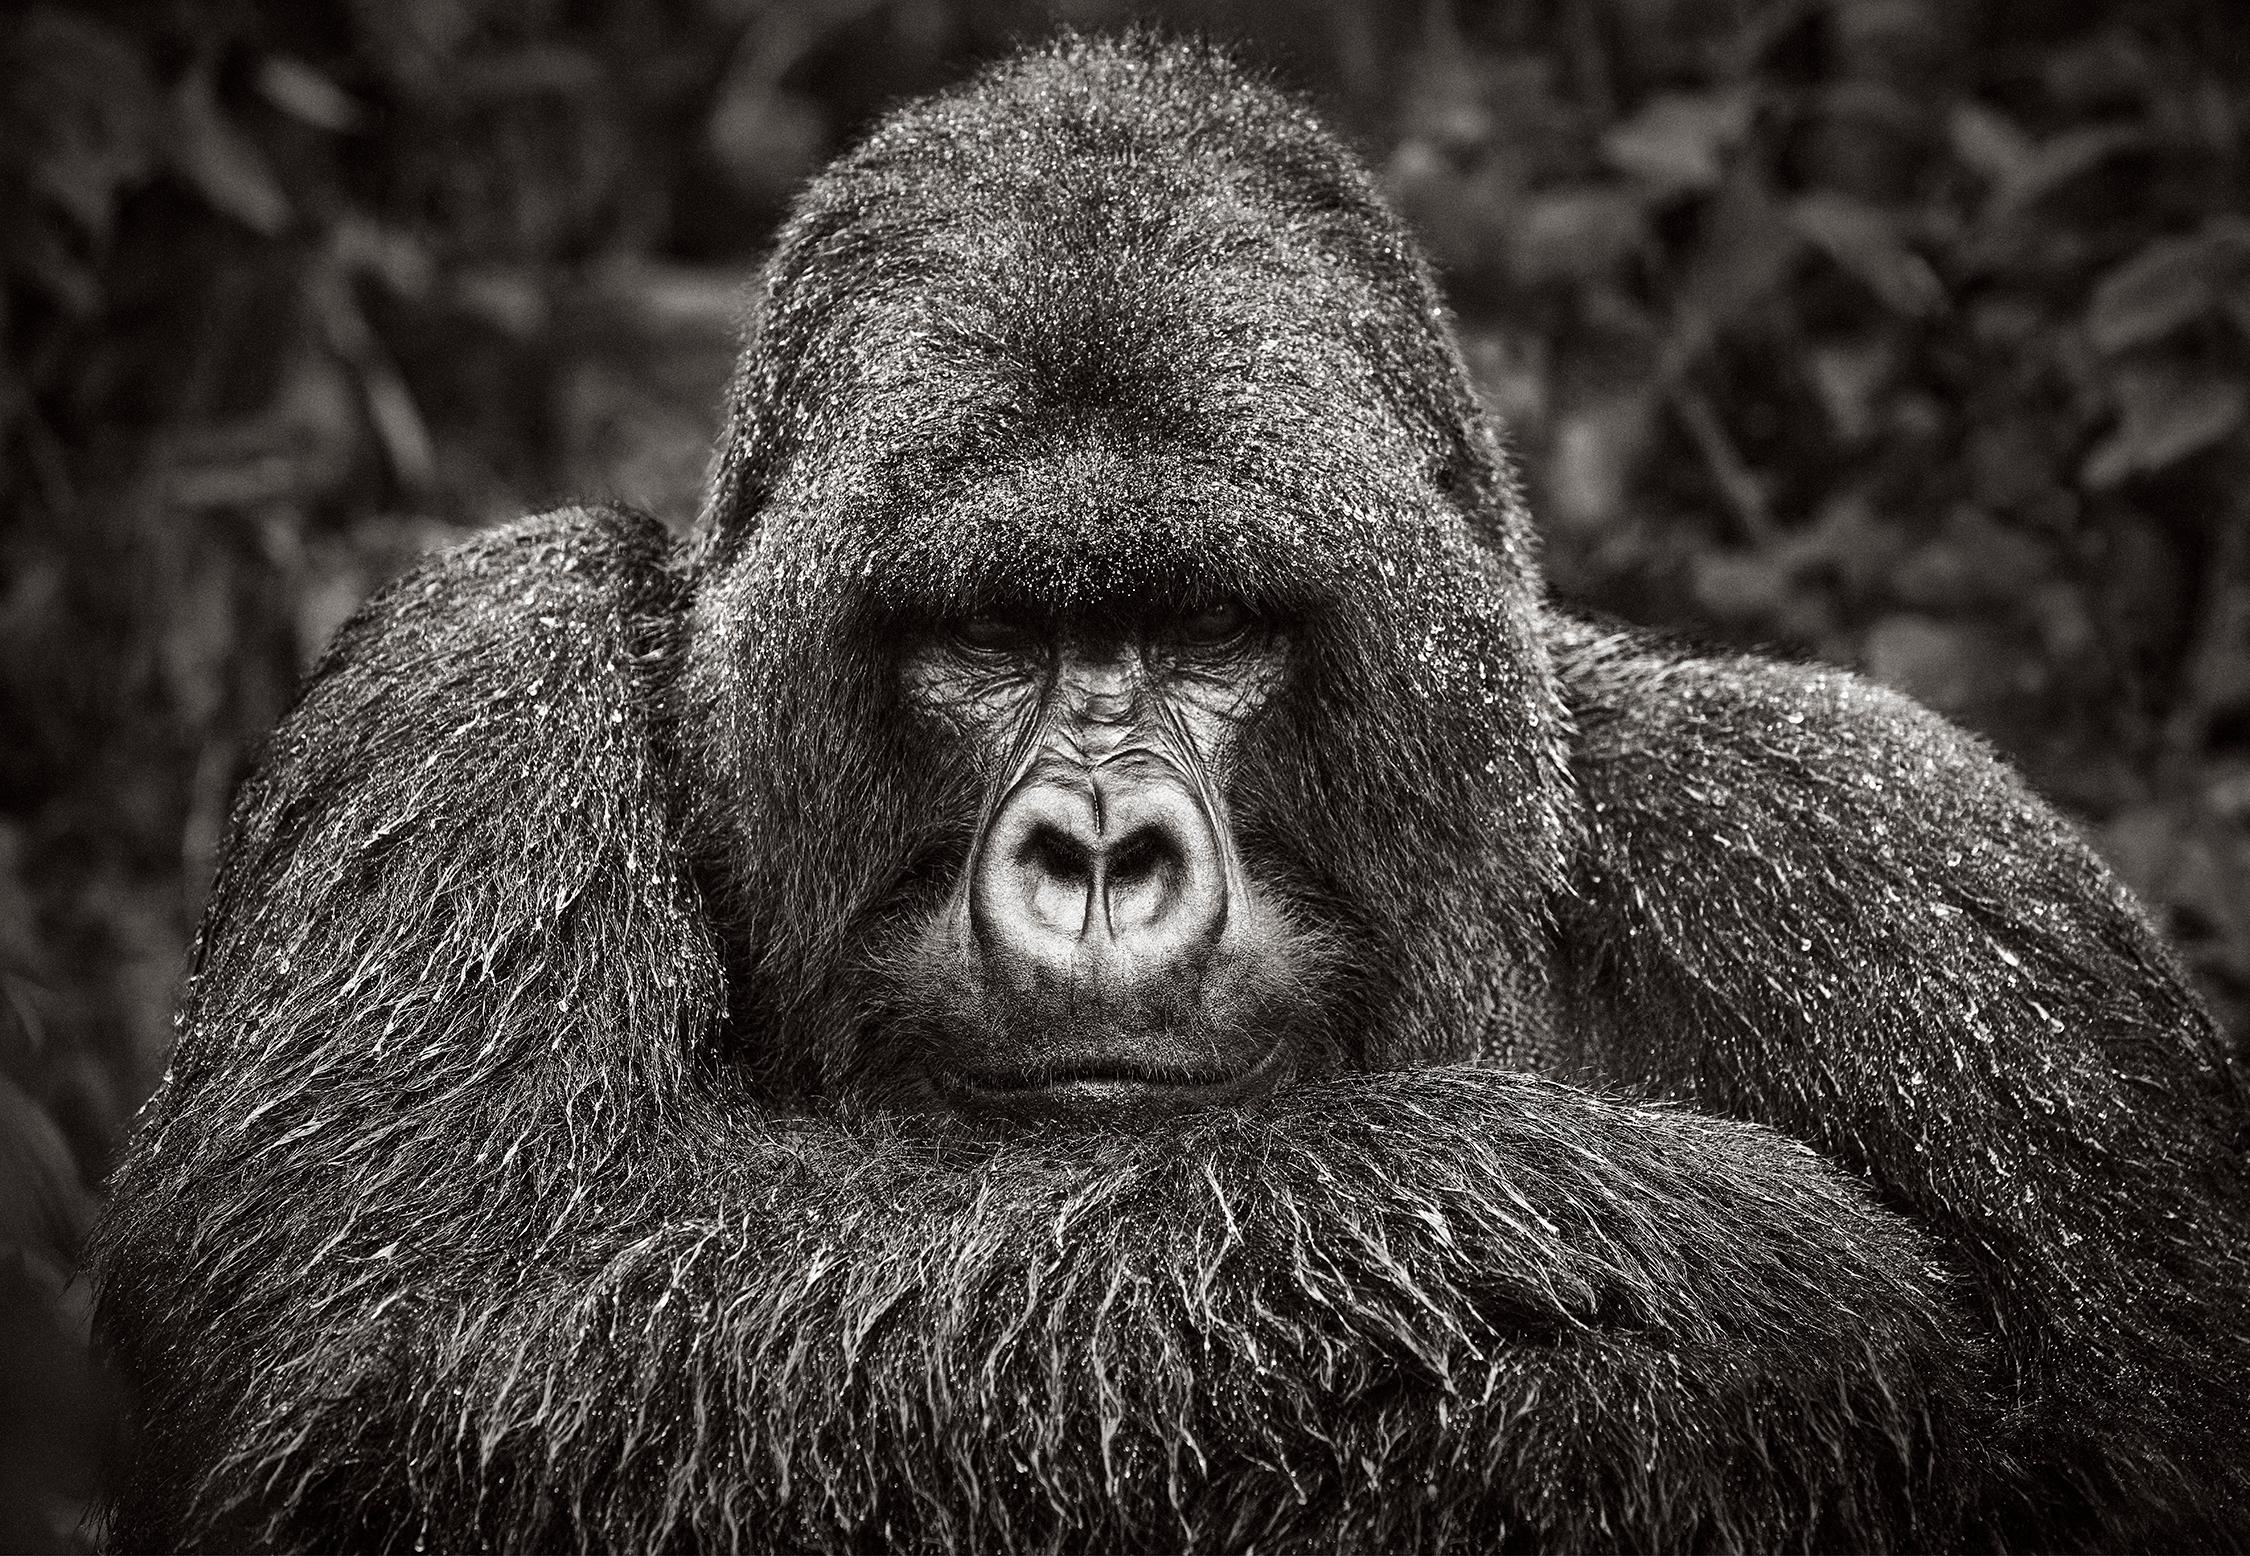 Drew Doggett Black and White Photograph - Intimate Portrait of a Mountain Gorilla, Black & White Photography, Iconic 